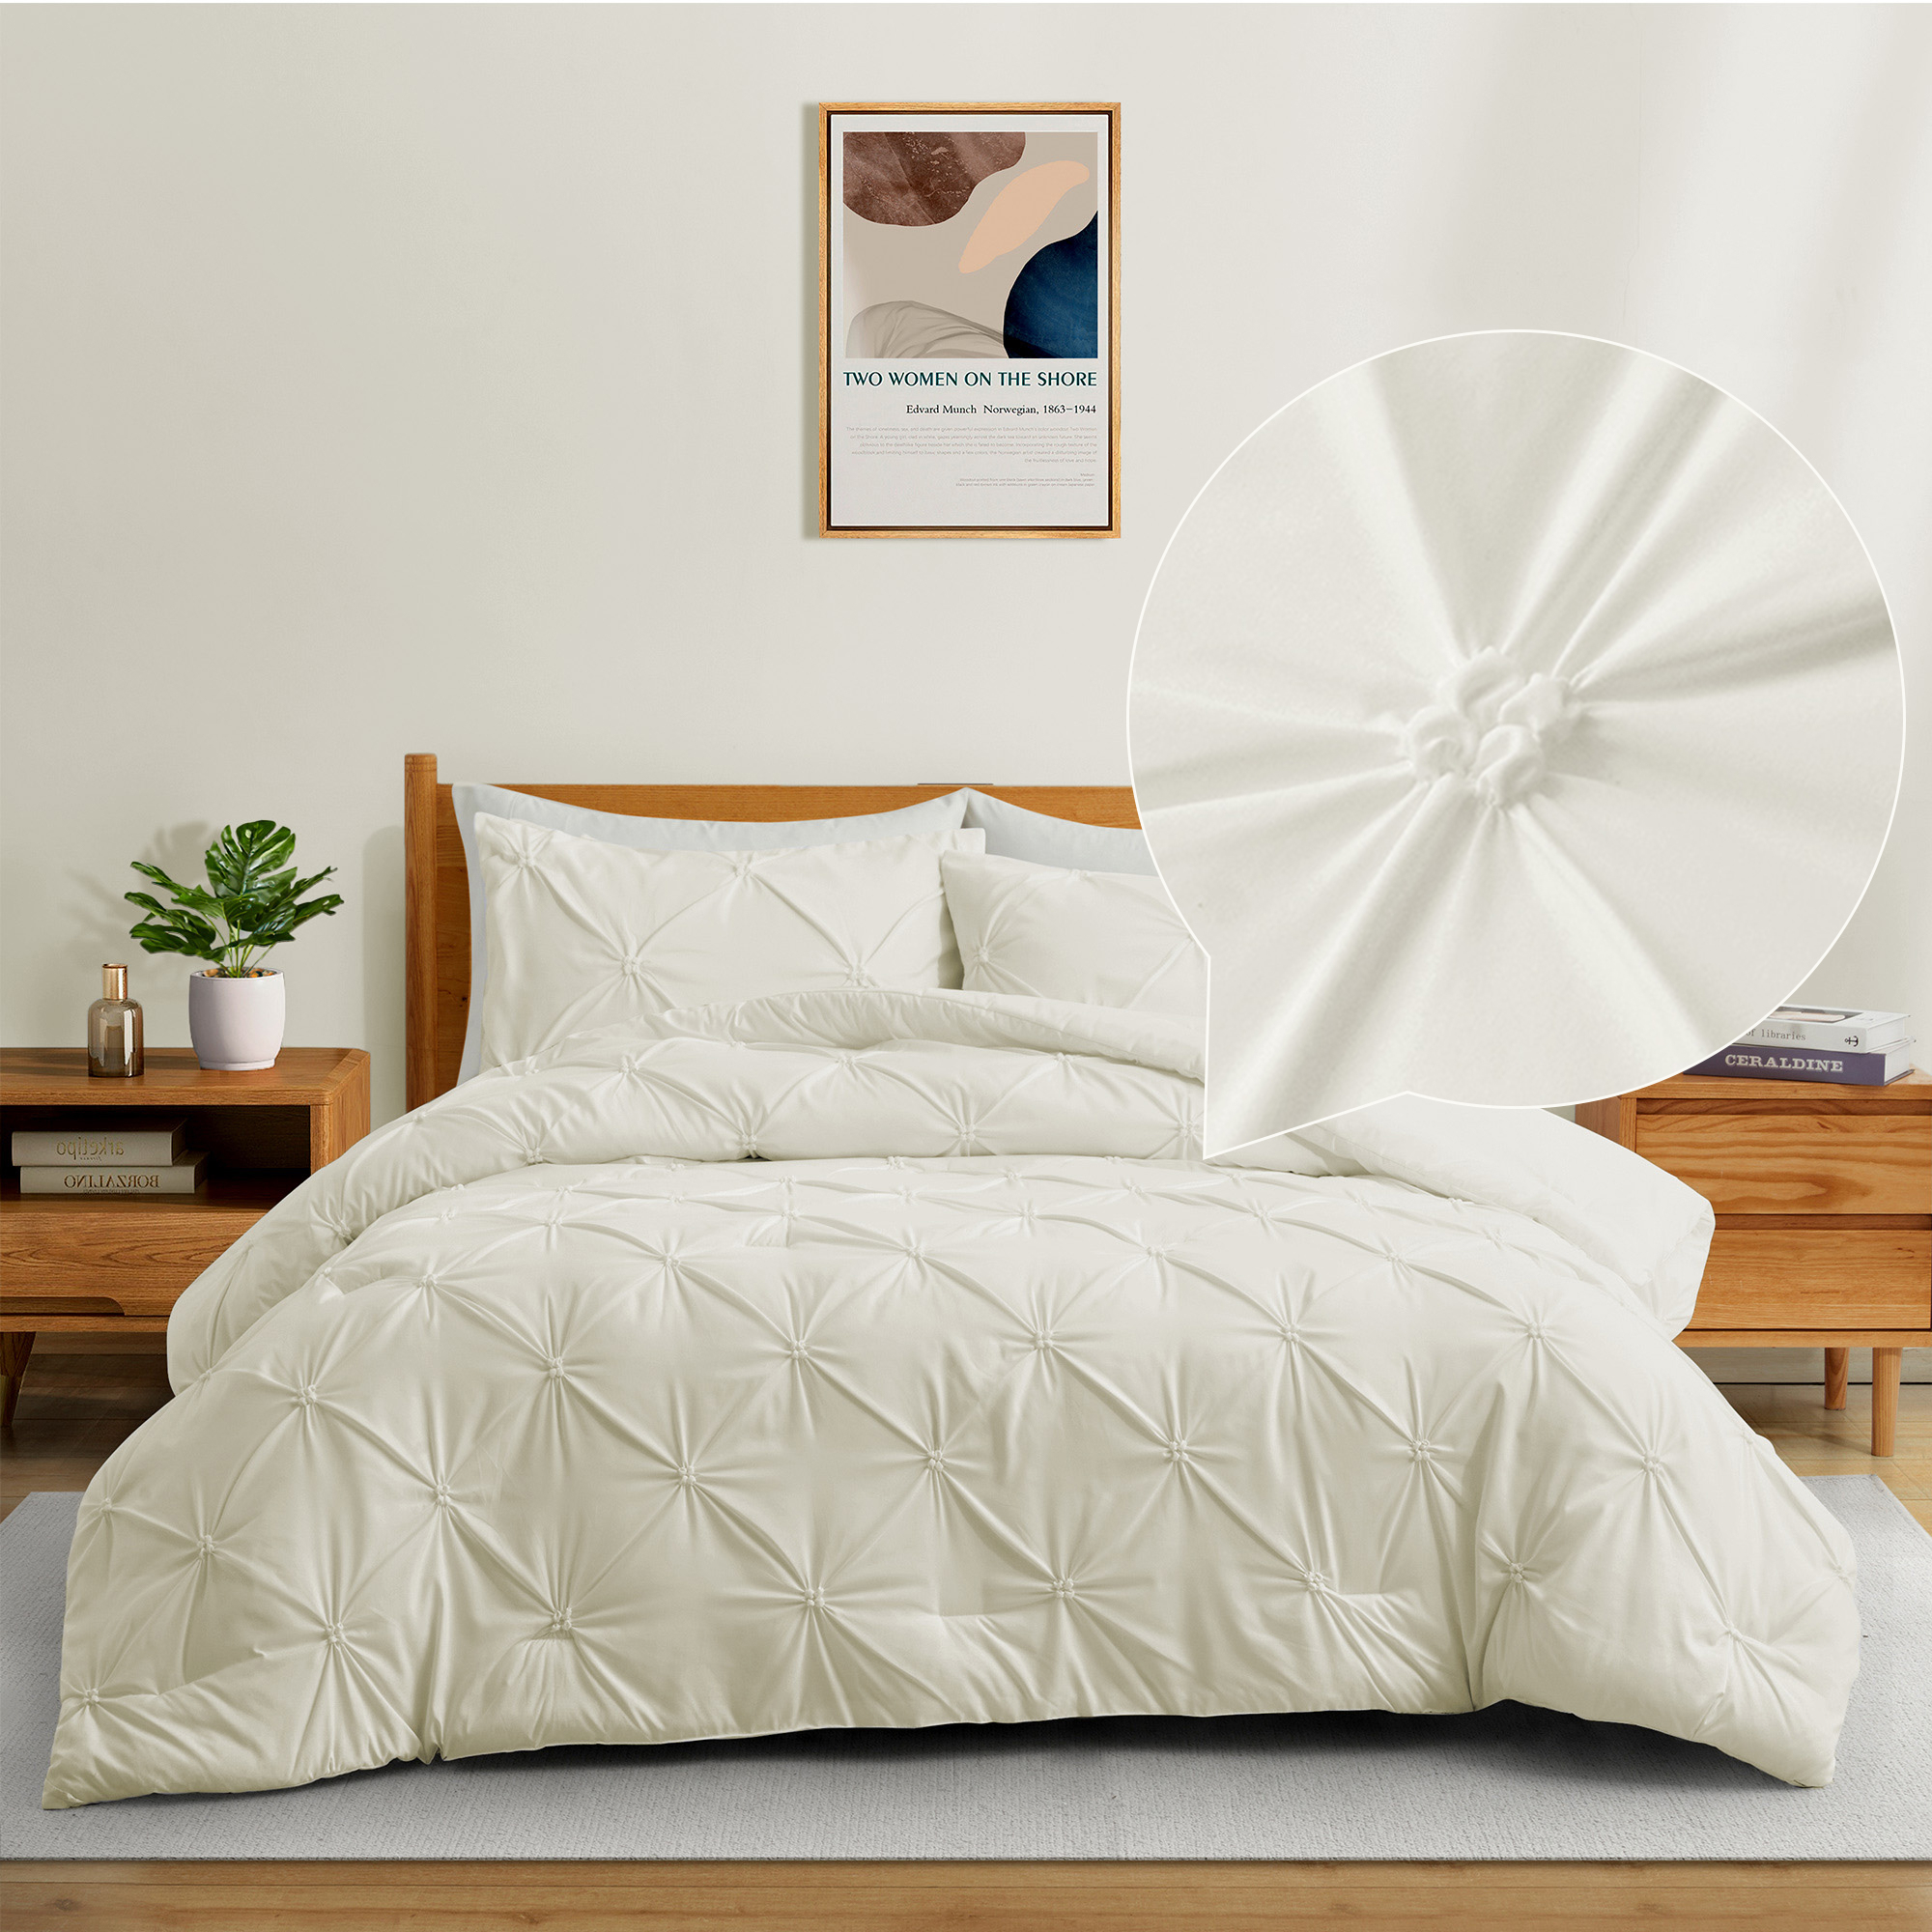 Pinch Pleat Microfiber Comforters, All Season Down Alternative Comforter Set - Full/Queen Size